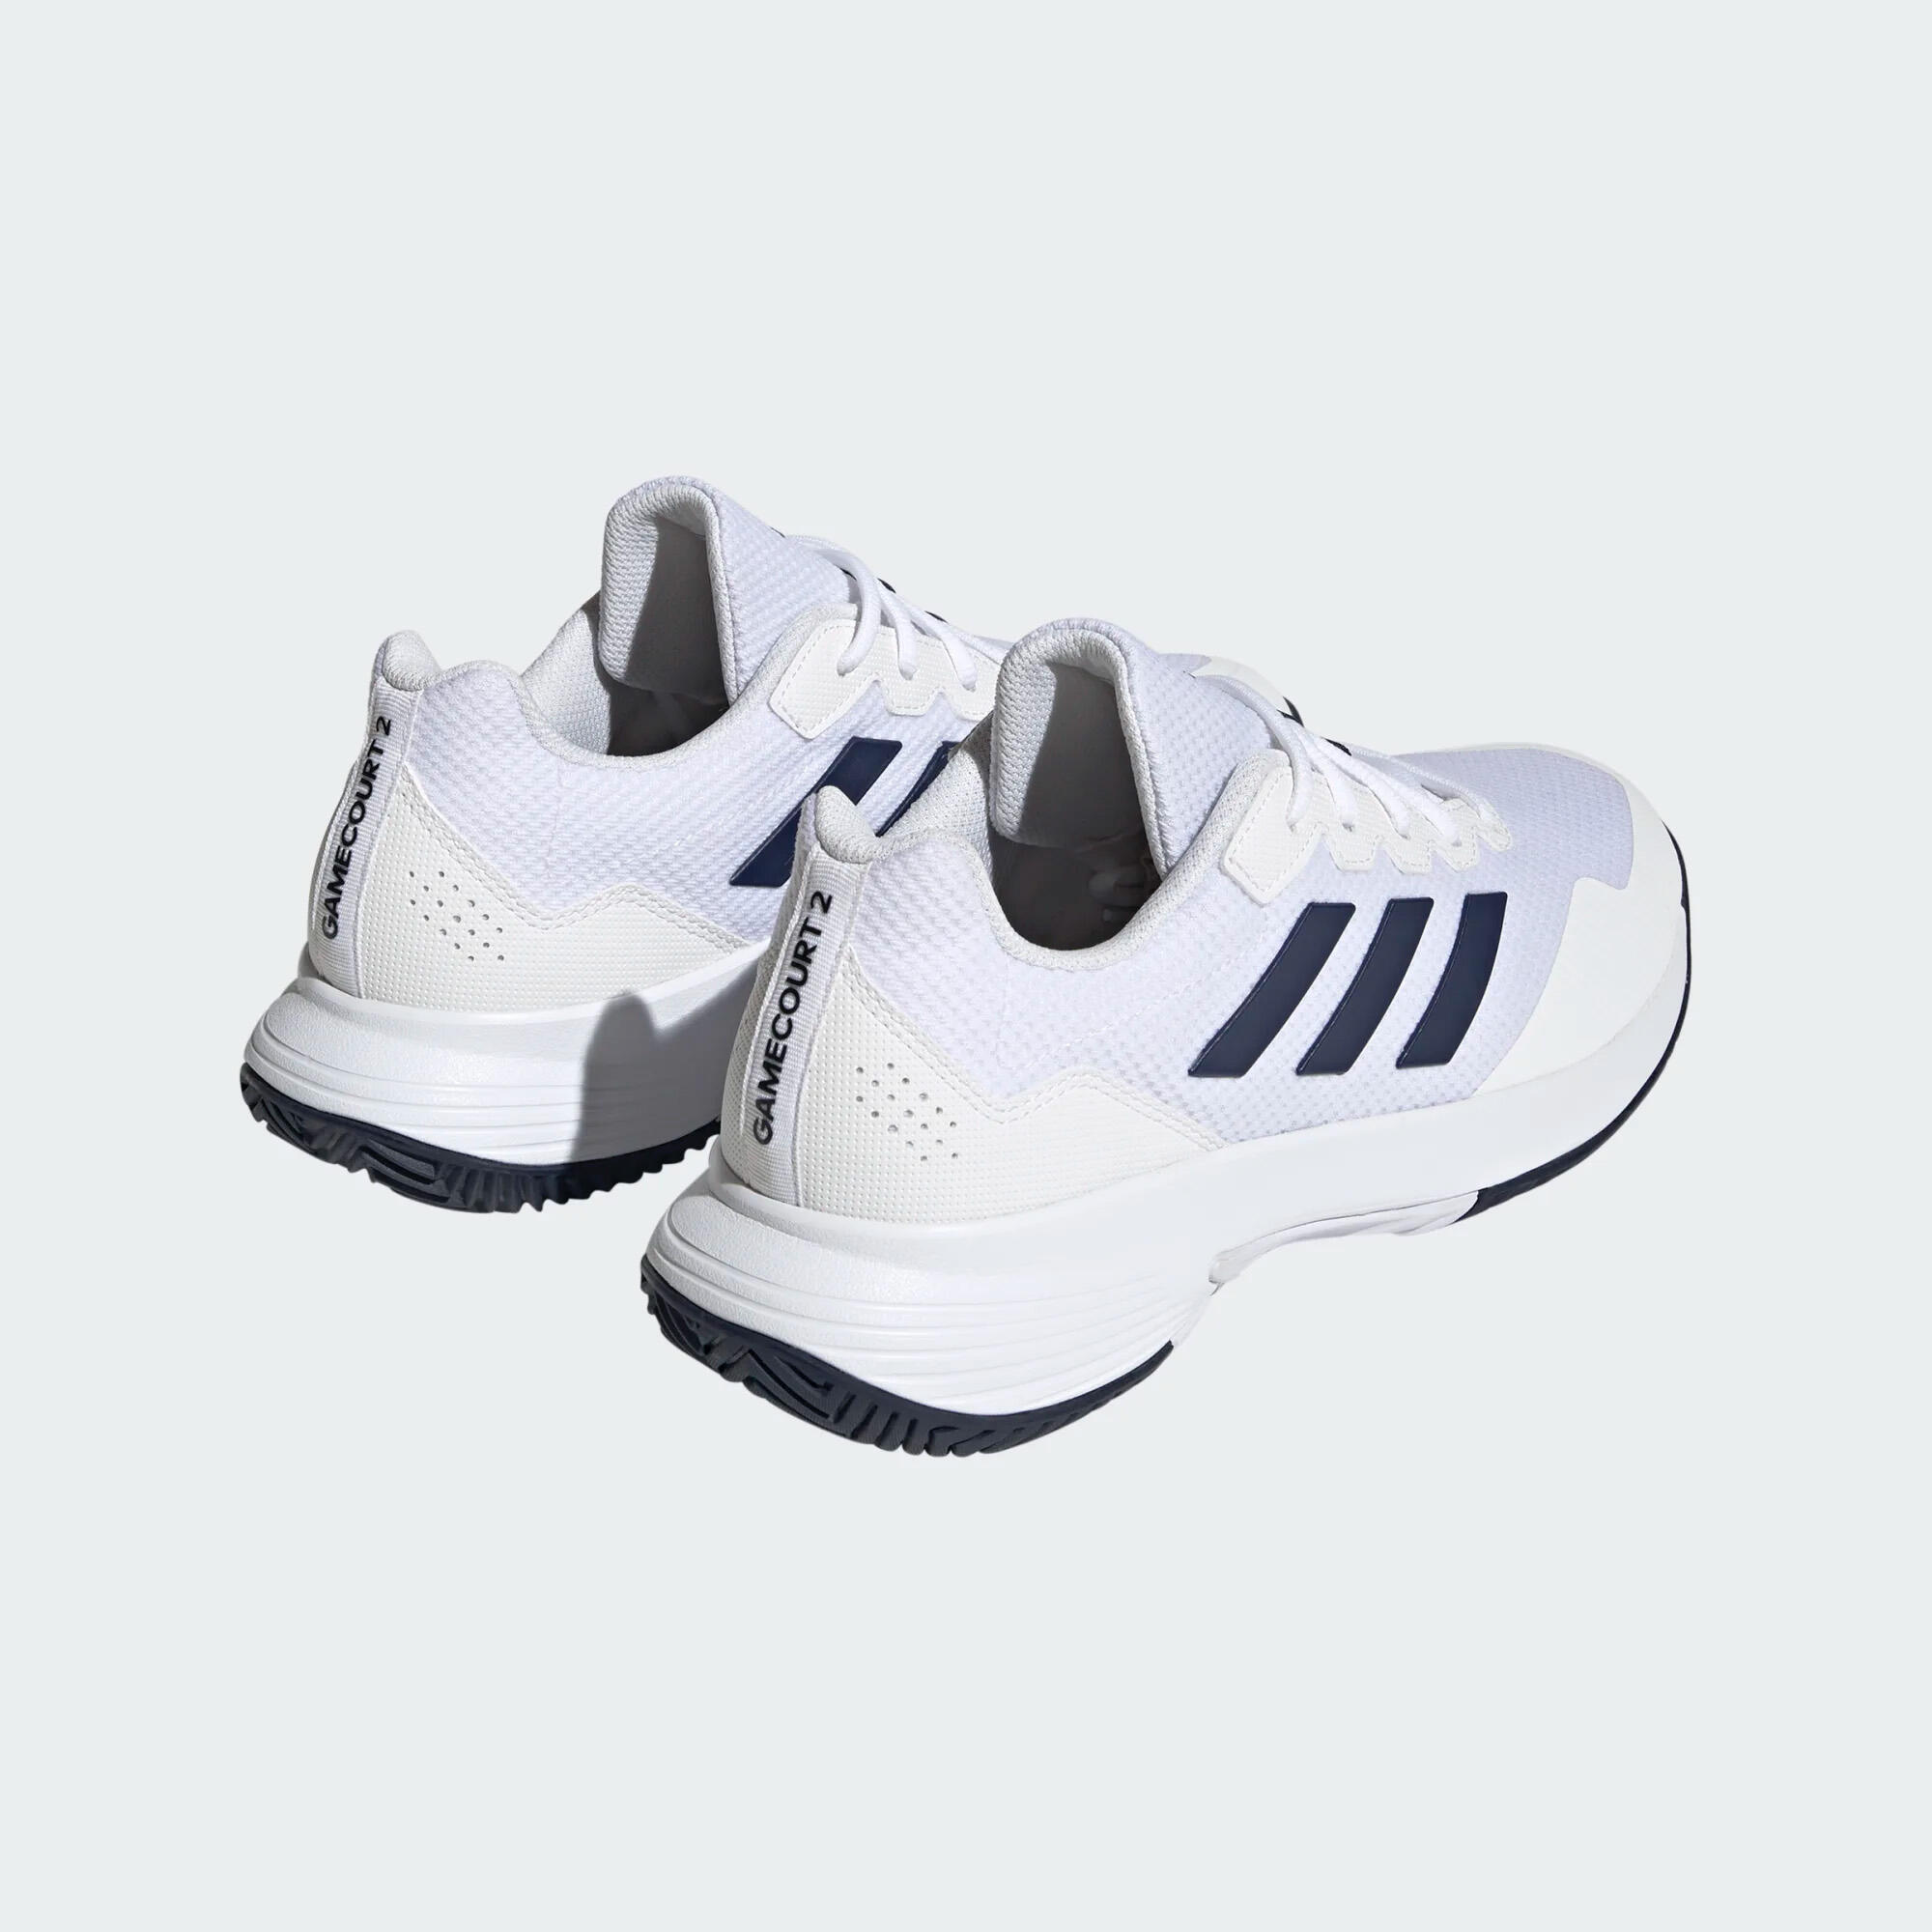 Men's Multicourt Tennis Shoes Gamecourt - White 6/8